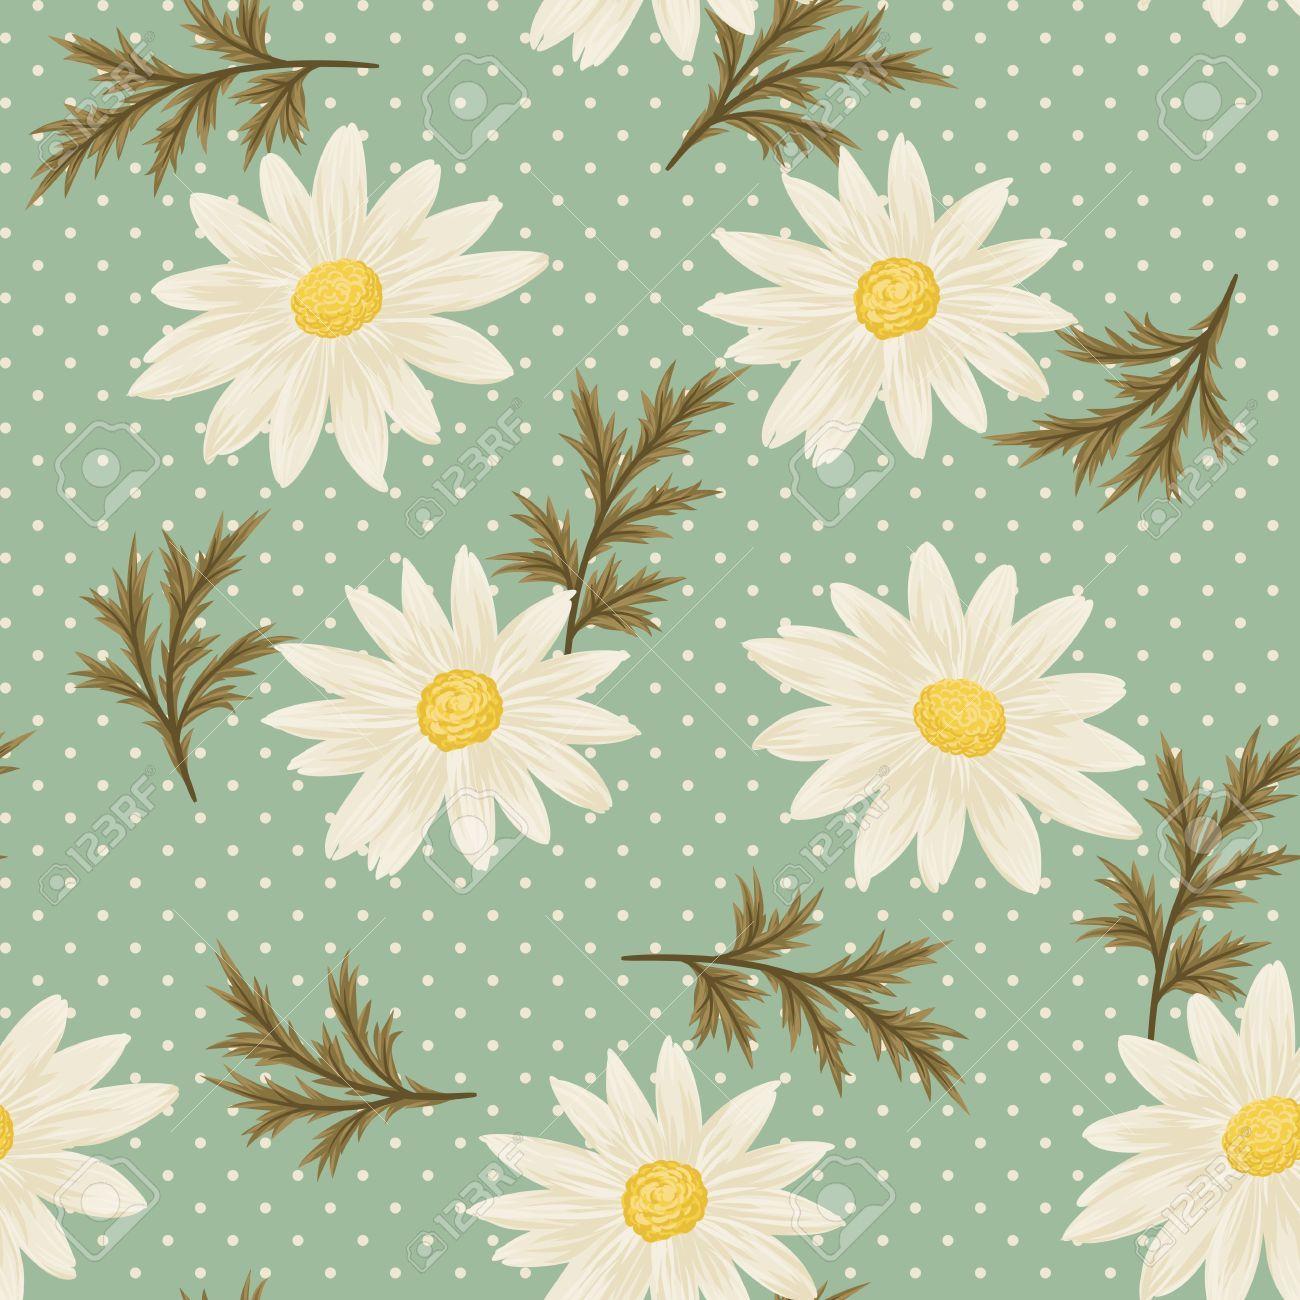 Retro Daisy Fabric Wallpaper and Home Decor  Spoonflower